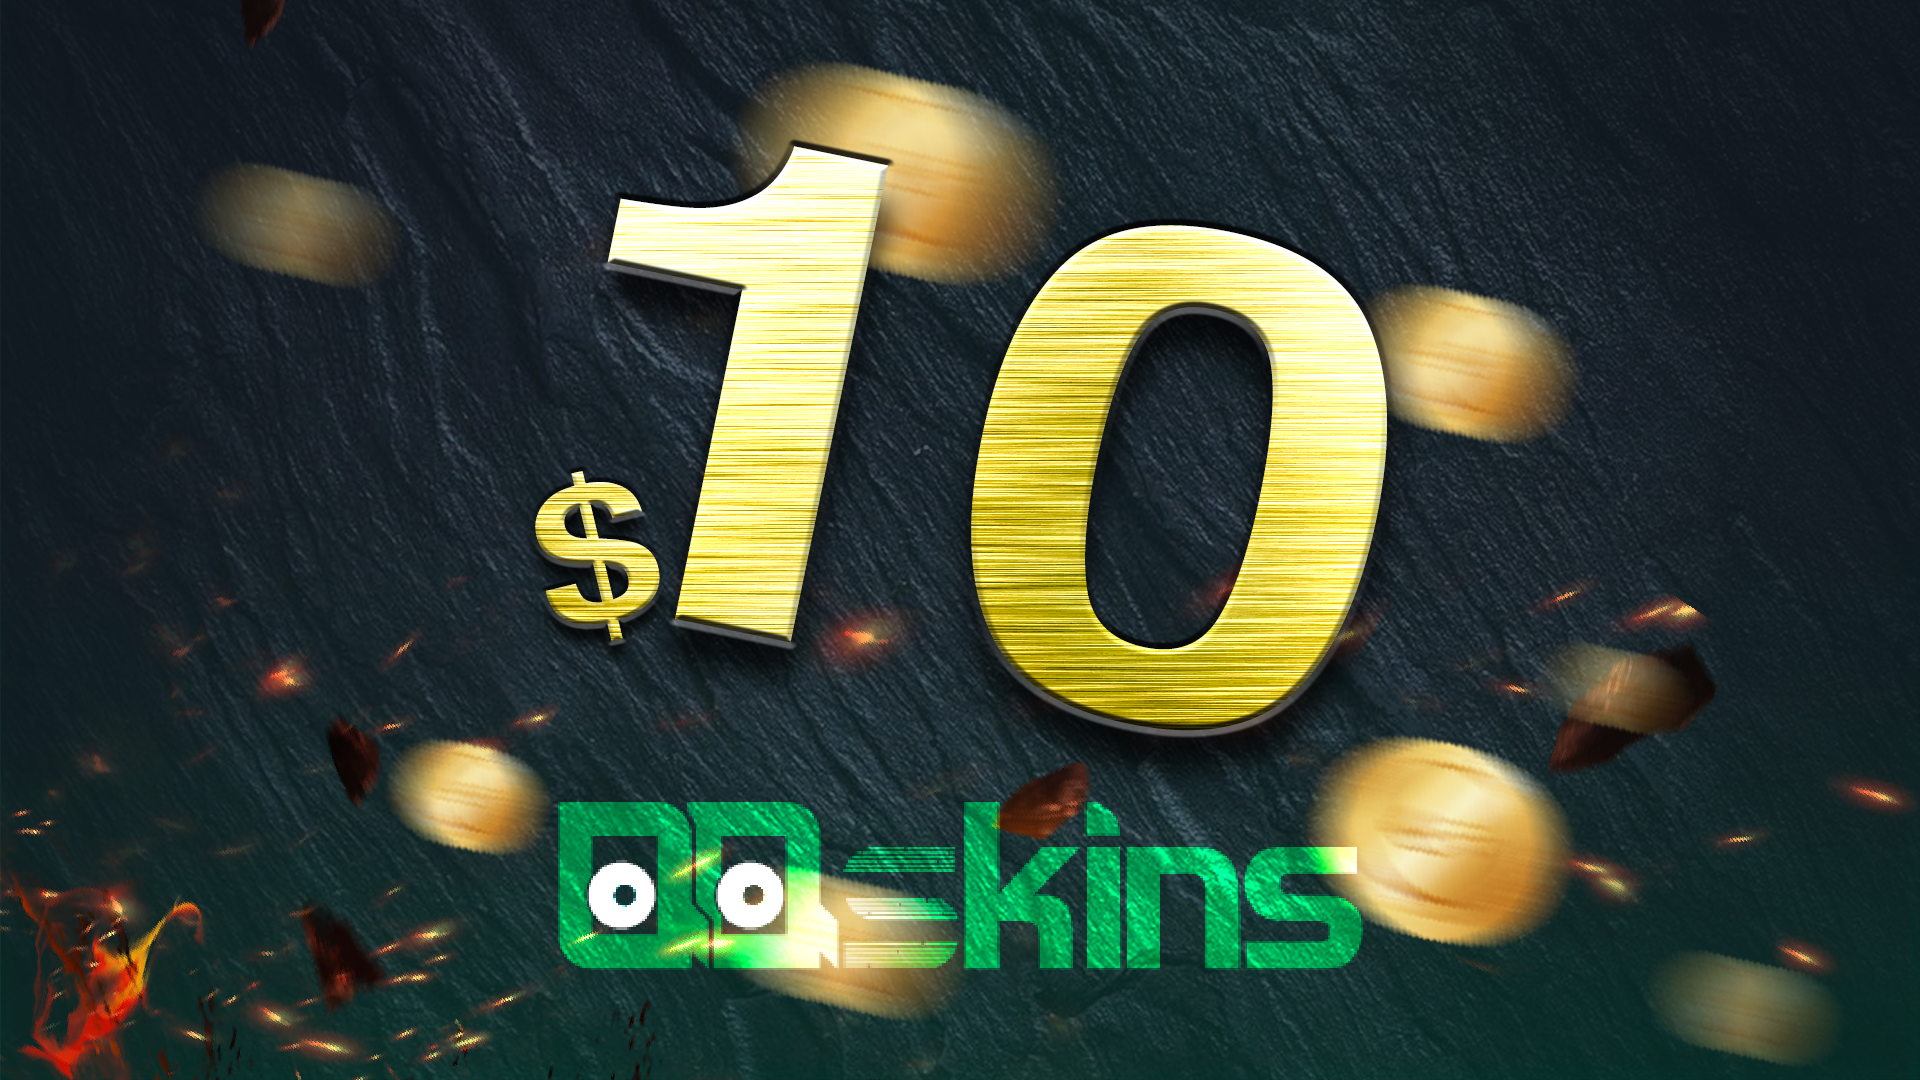 (11.32$) QQSkins $10 Wallet Card